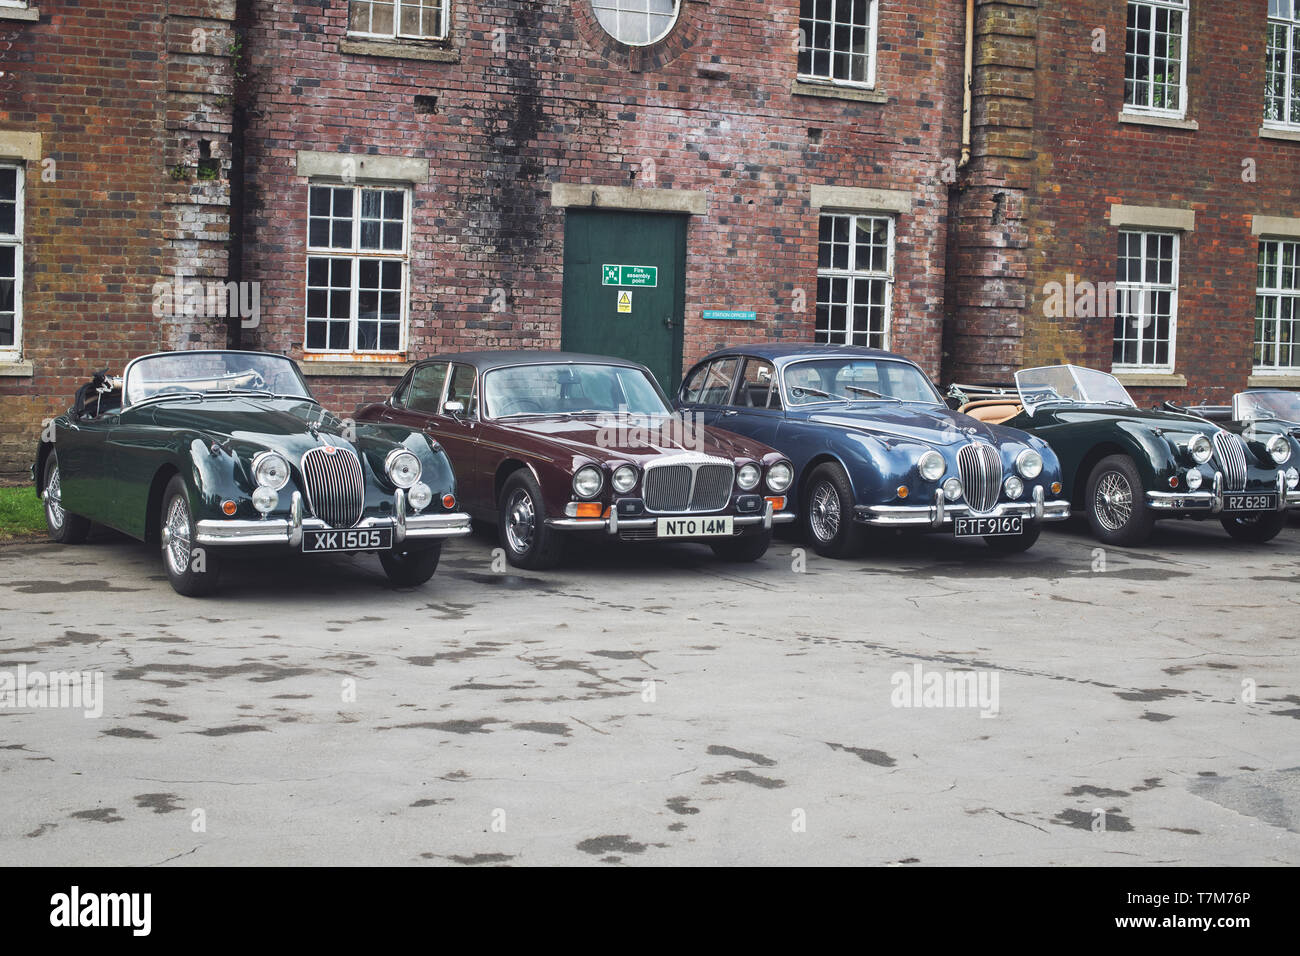 Vintage Jaguar and Daimler cars at Bicester Heritage Centre ‘Drive it day’. Bicester, Oxfordshire, England. Vintage filter applied Stock Photo